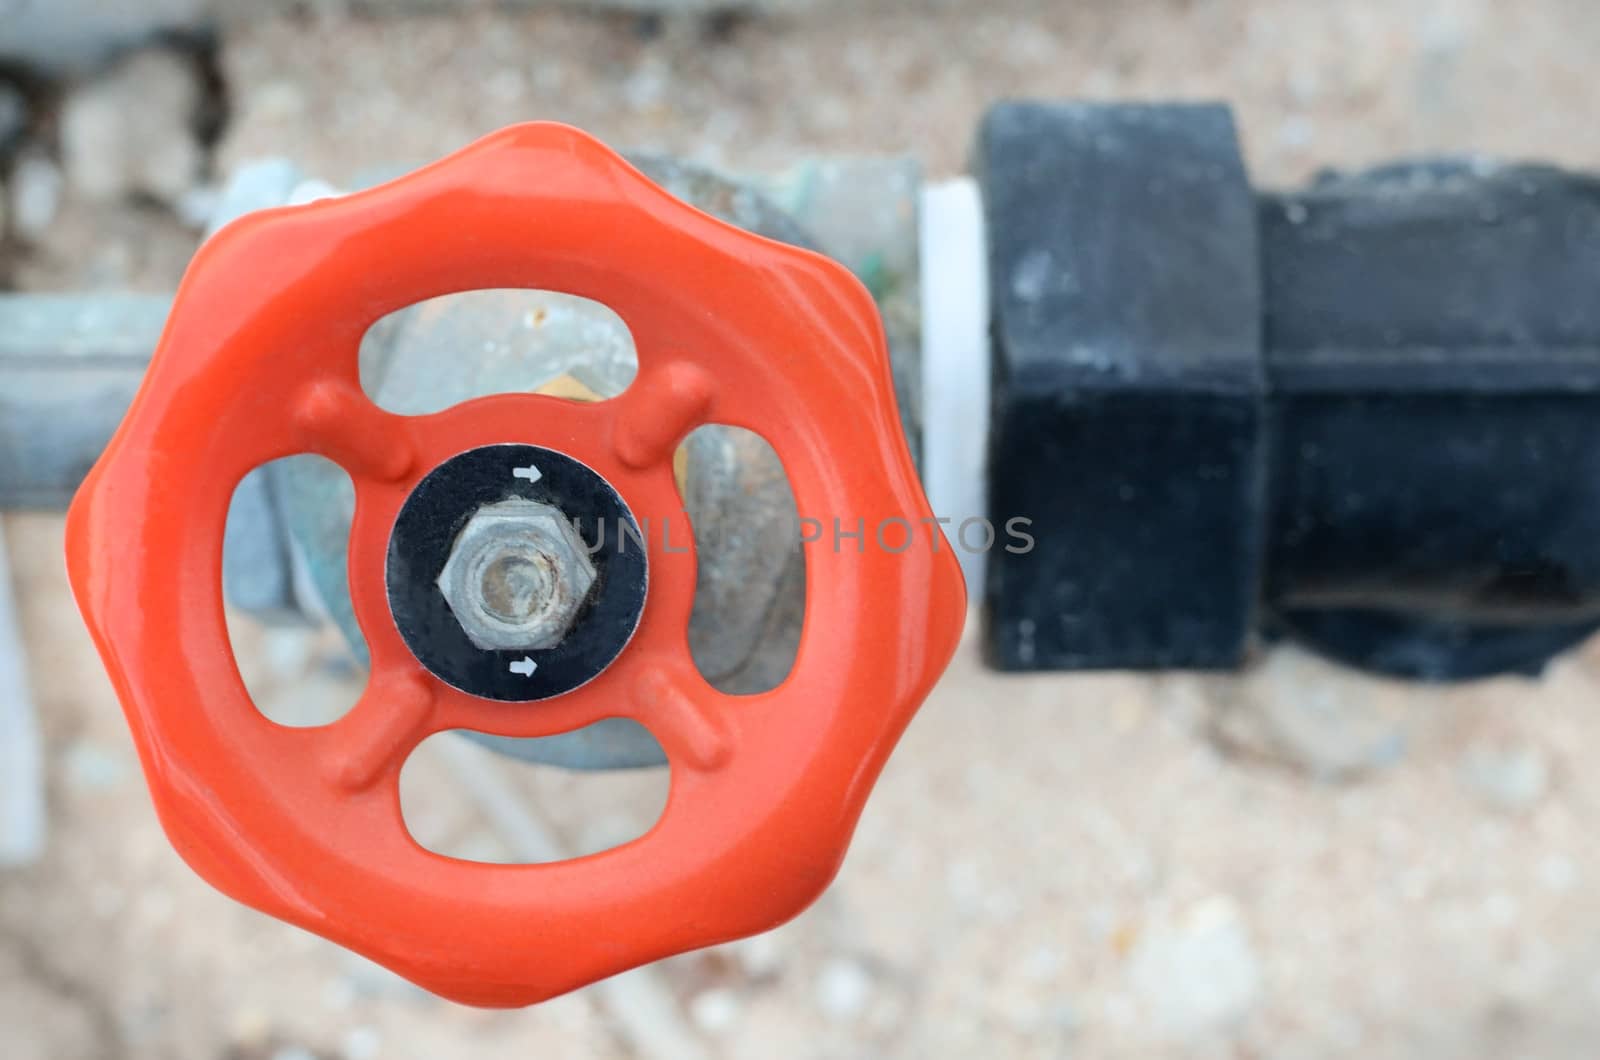 orange water valve and steel pipe